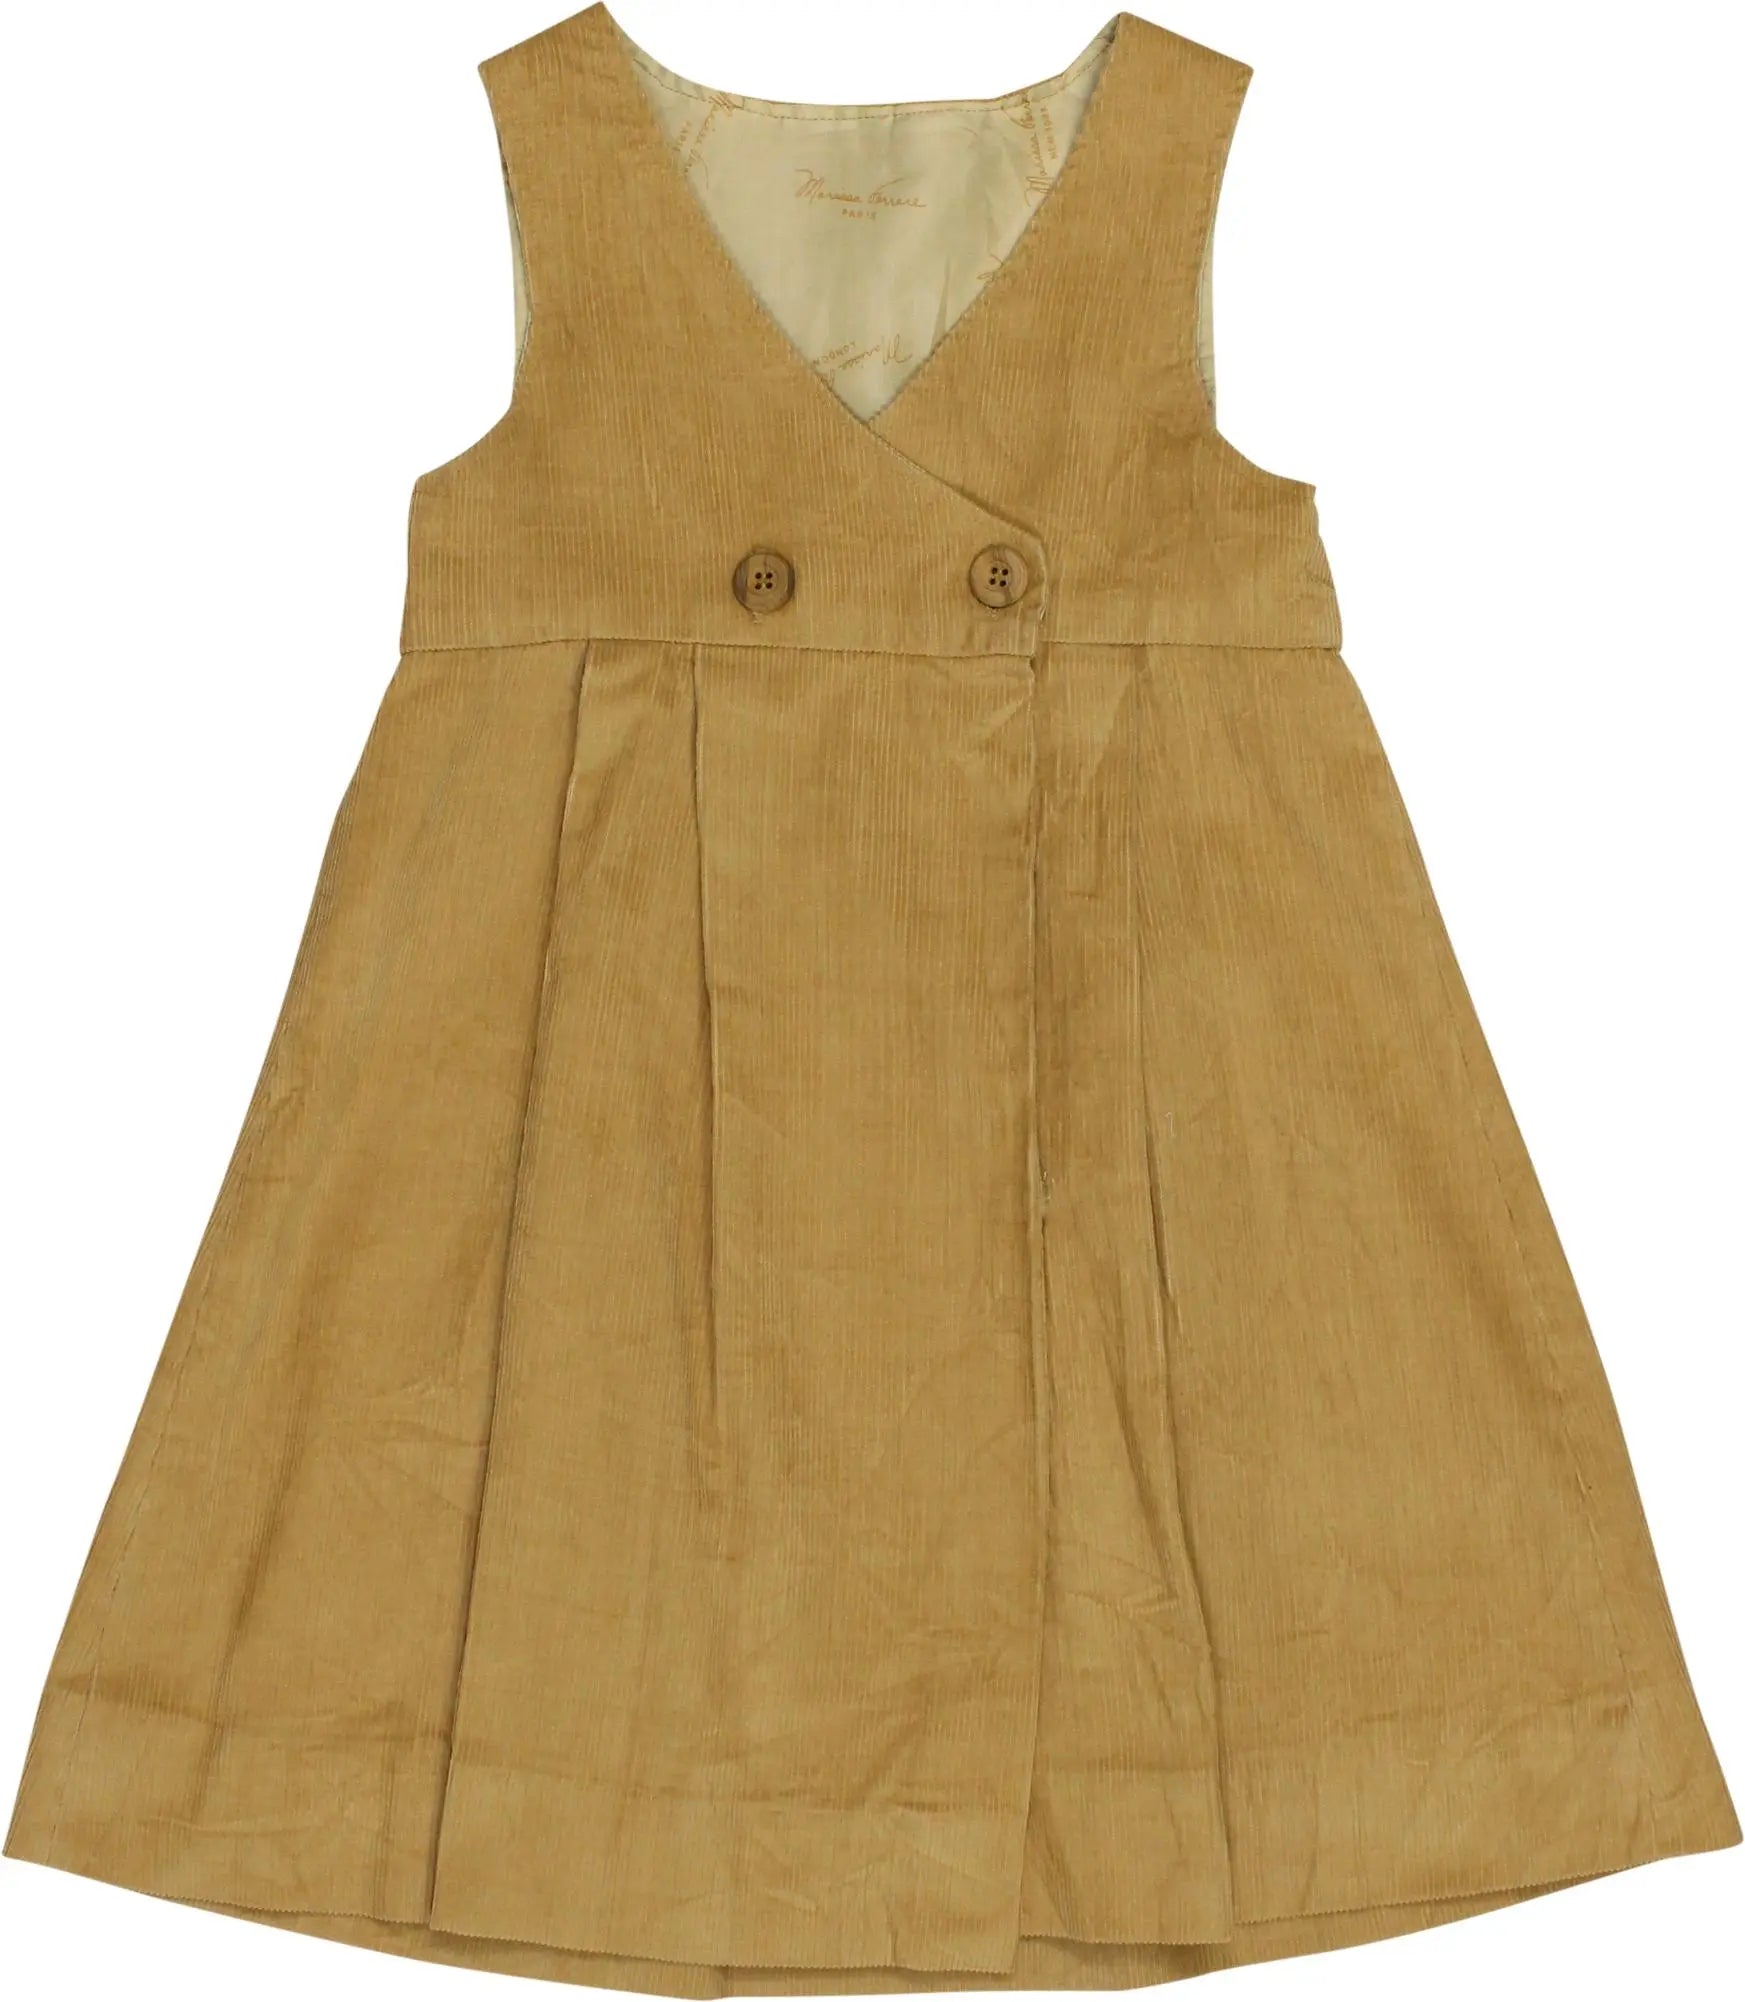 Marissa Ferrare - Dress- ThriftTale.com - Vintage and second handclothing